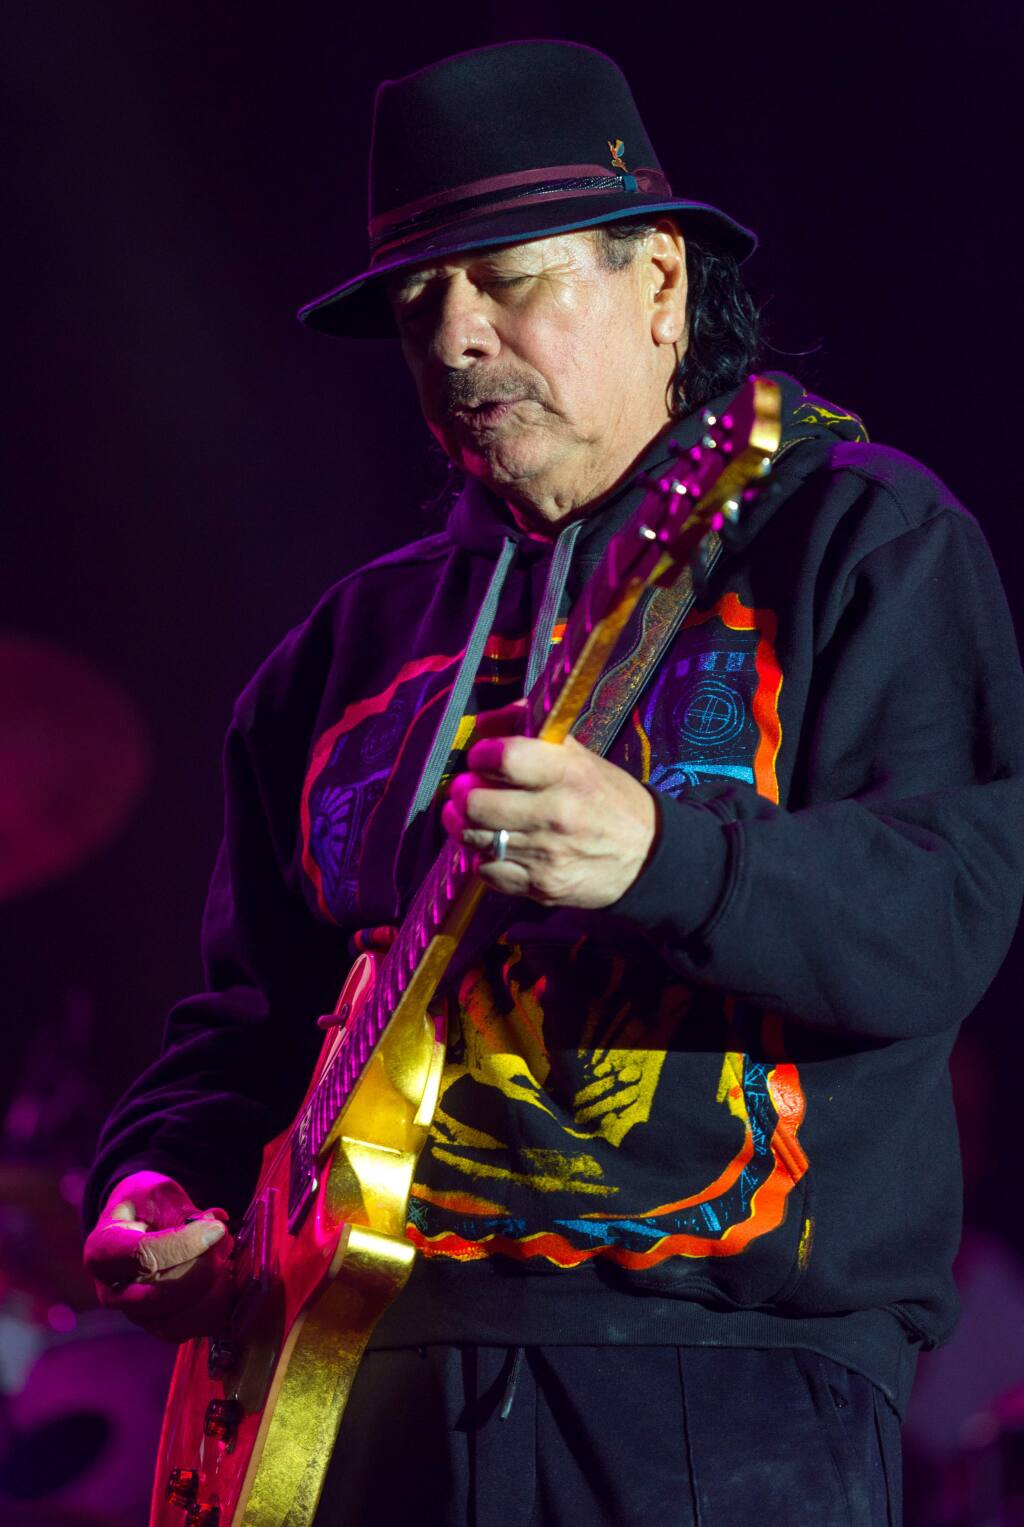 Carlos Santana performs during the third day of BottleRock Napa Valley in Napa, California, on Sunday, May 26, 2019. (Darryl Bush / For The Press Democrat)